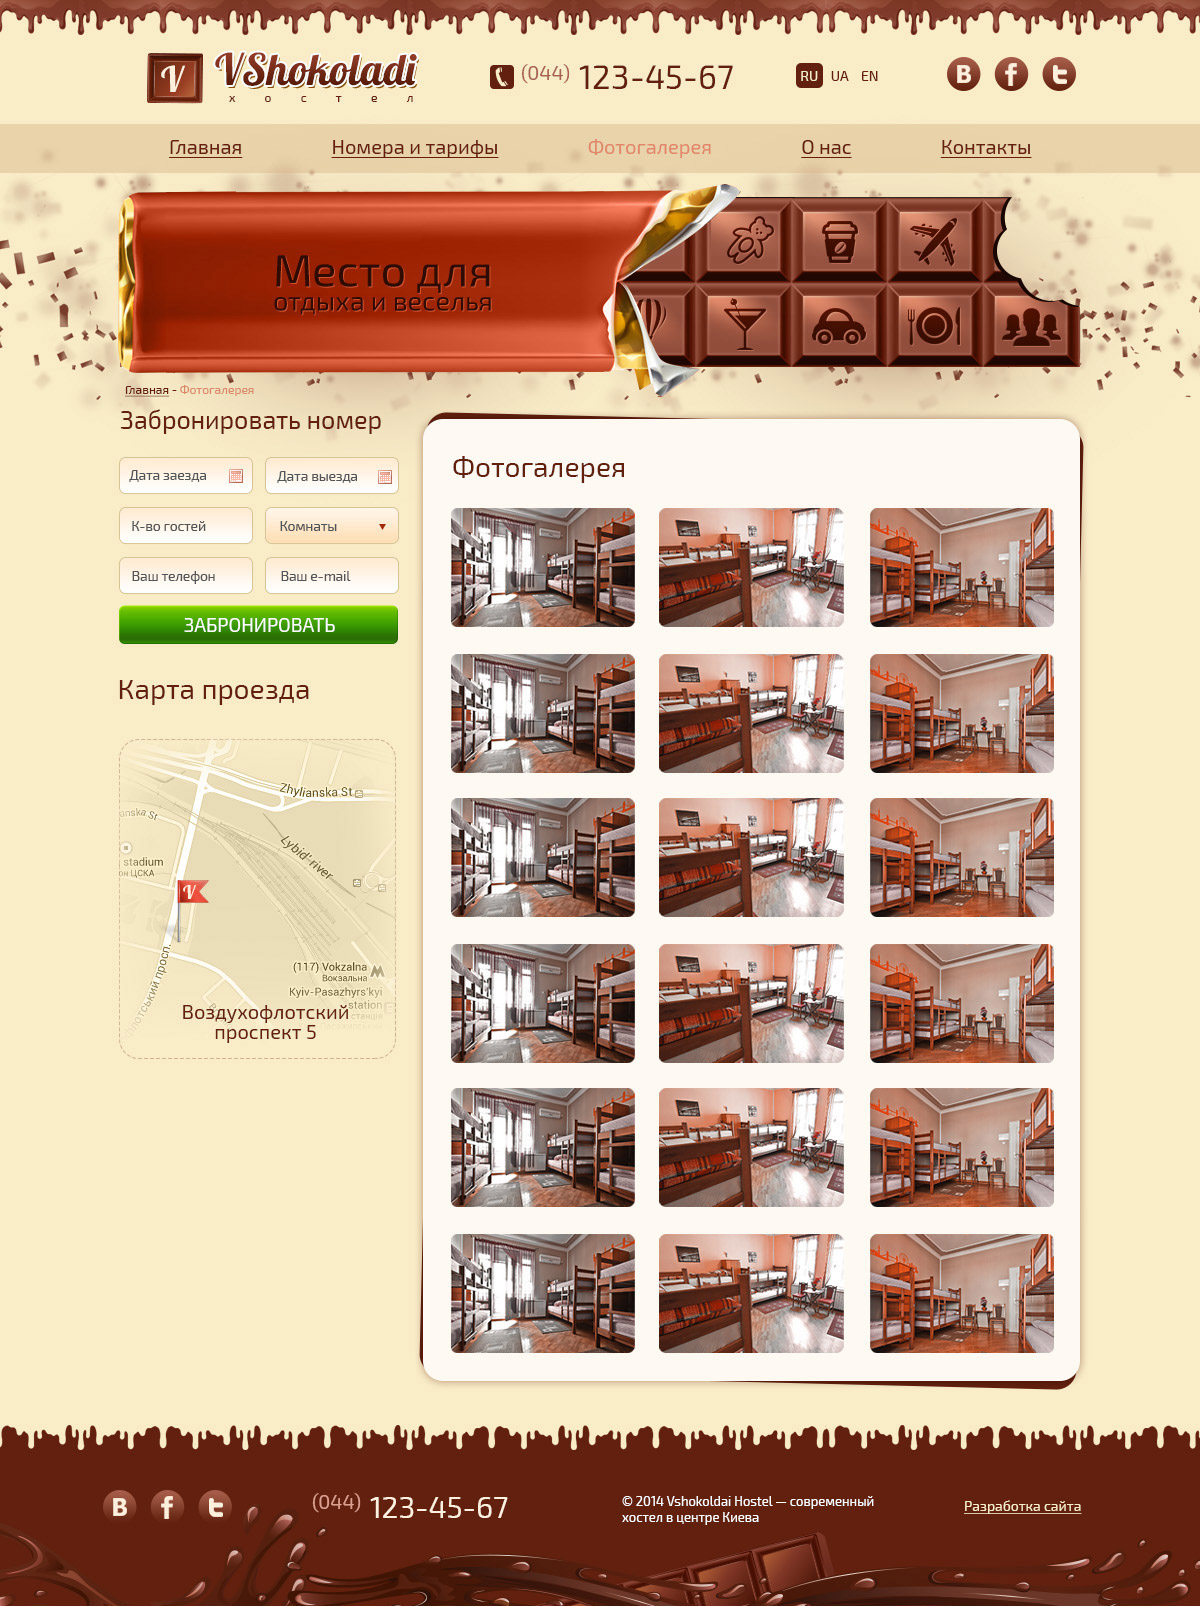 Gallery page design of Vshokoladi website